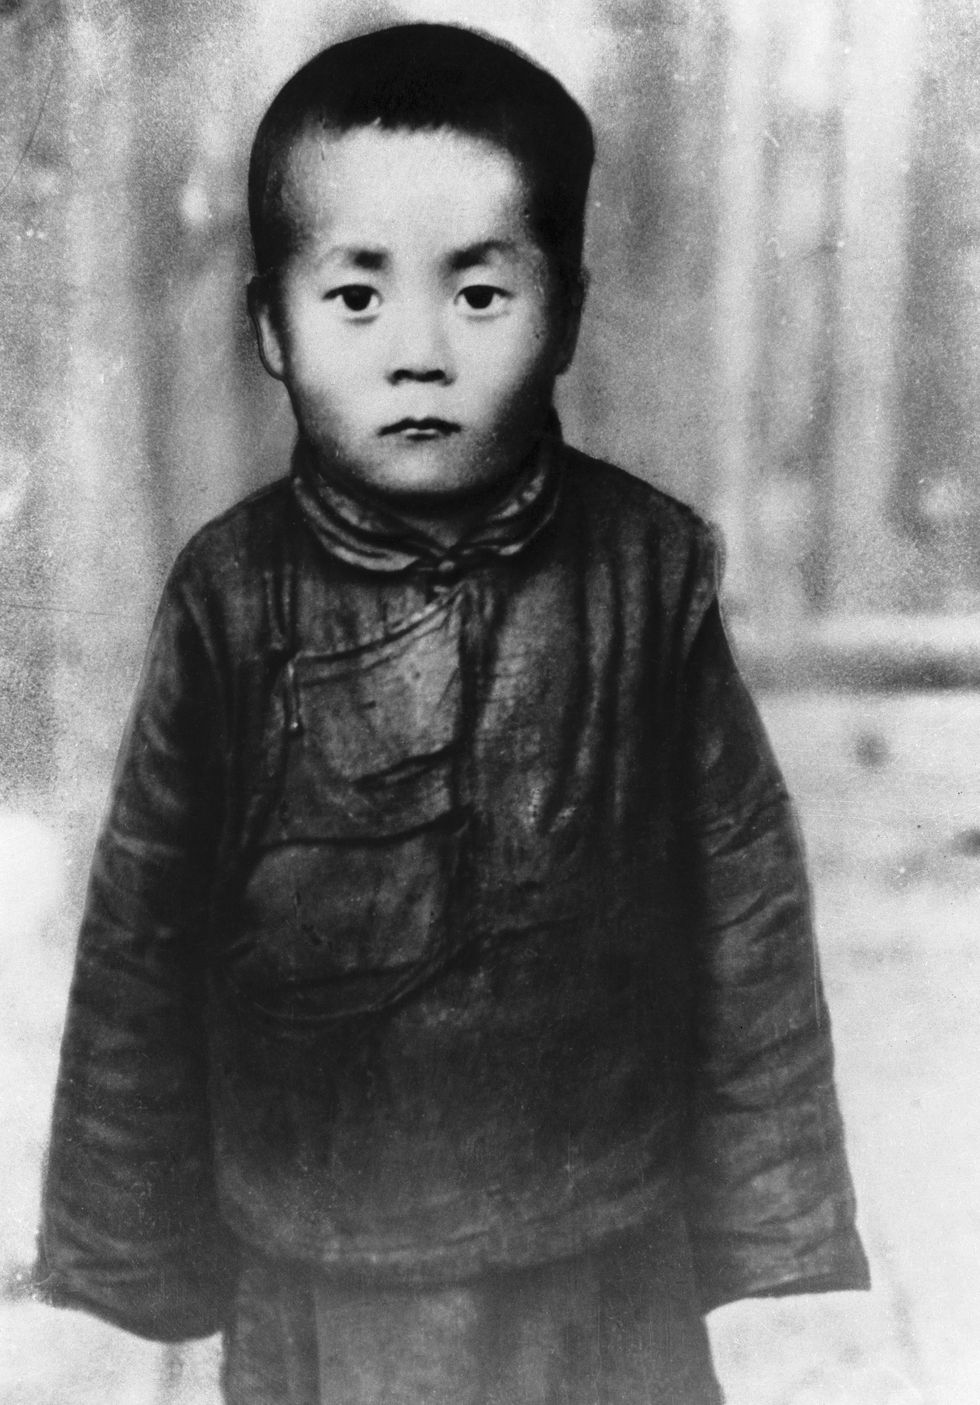 The 14th Dalai Lama at age 4